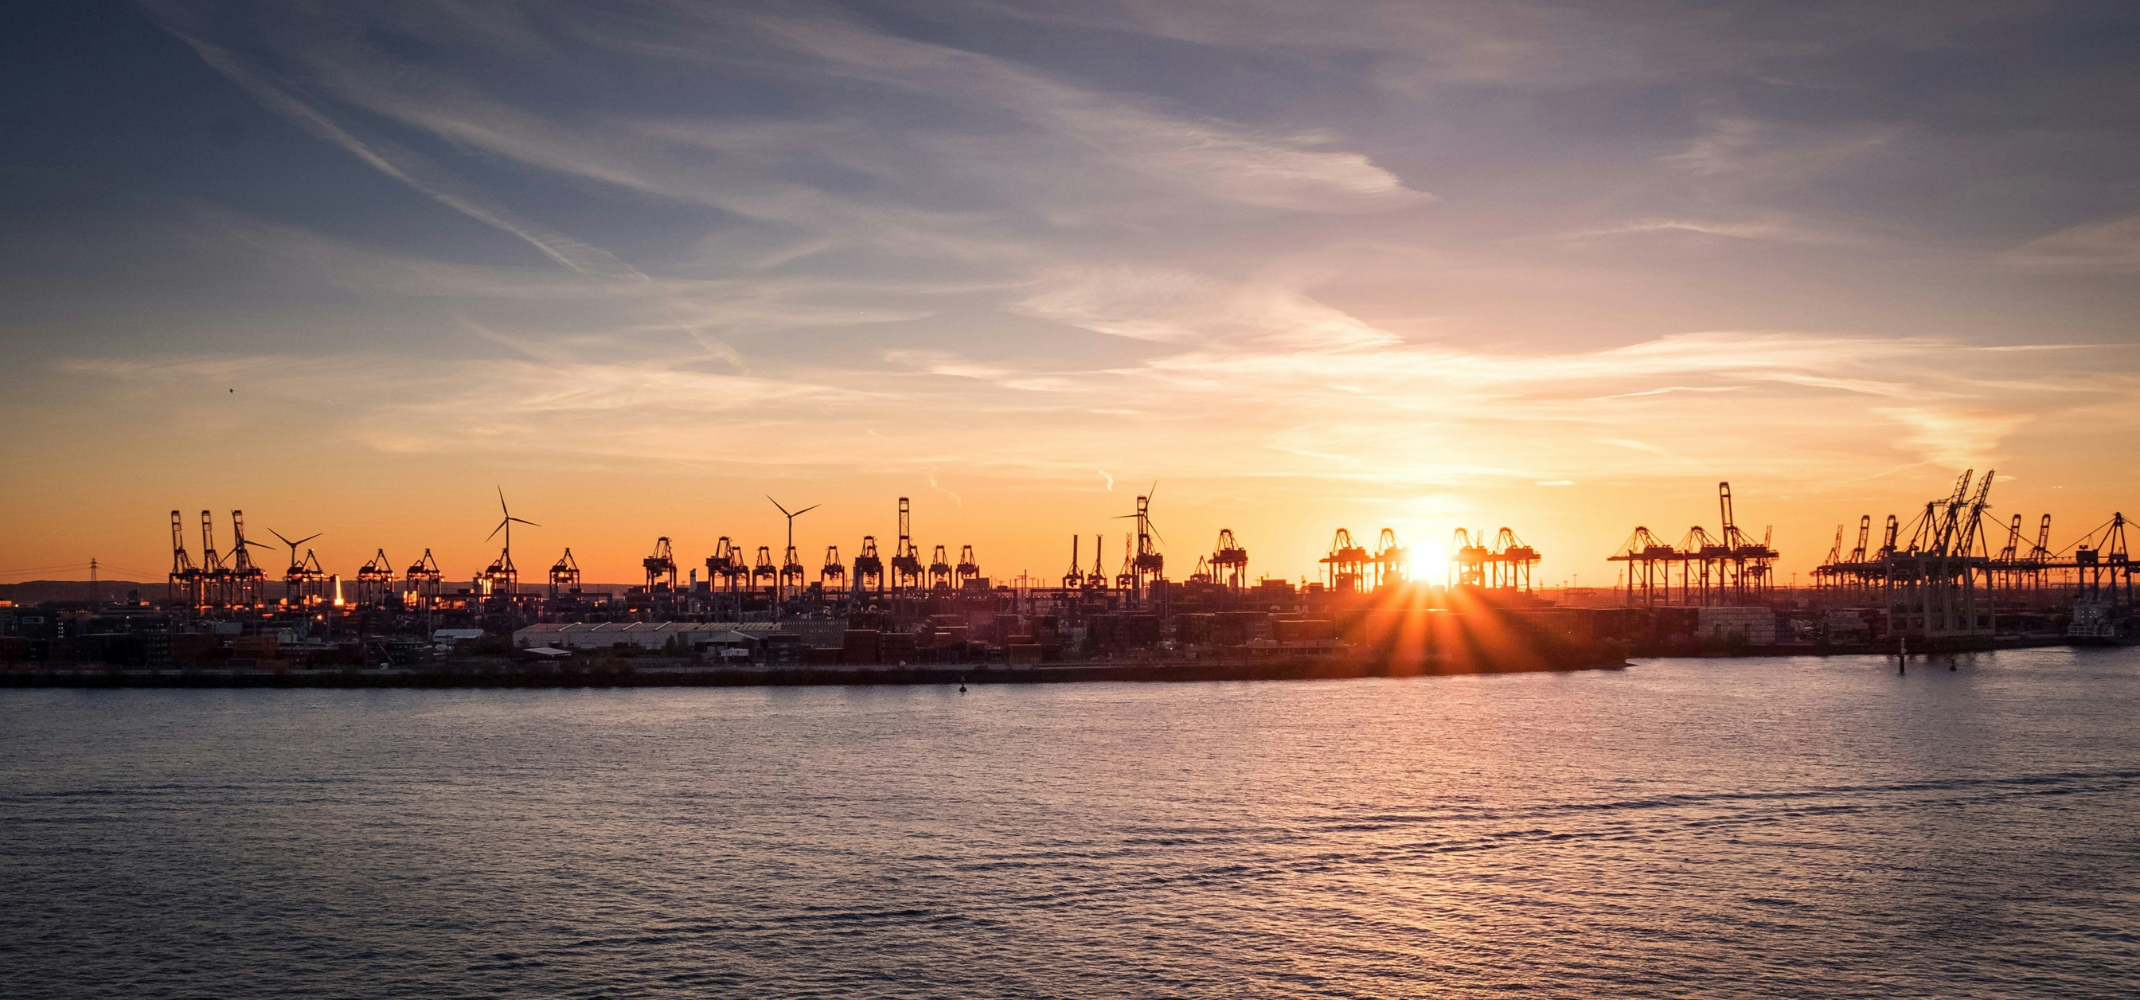 sun rising over a shipping port